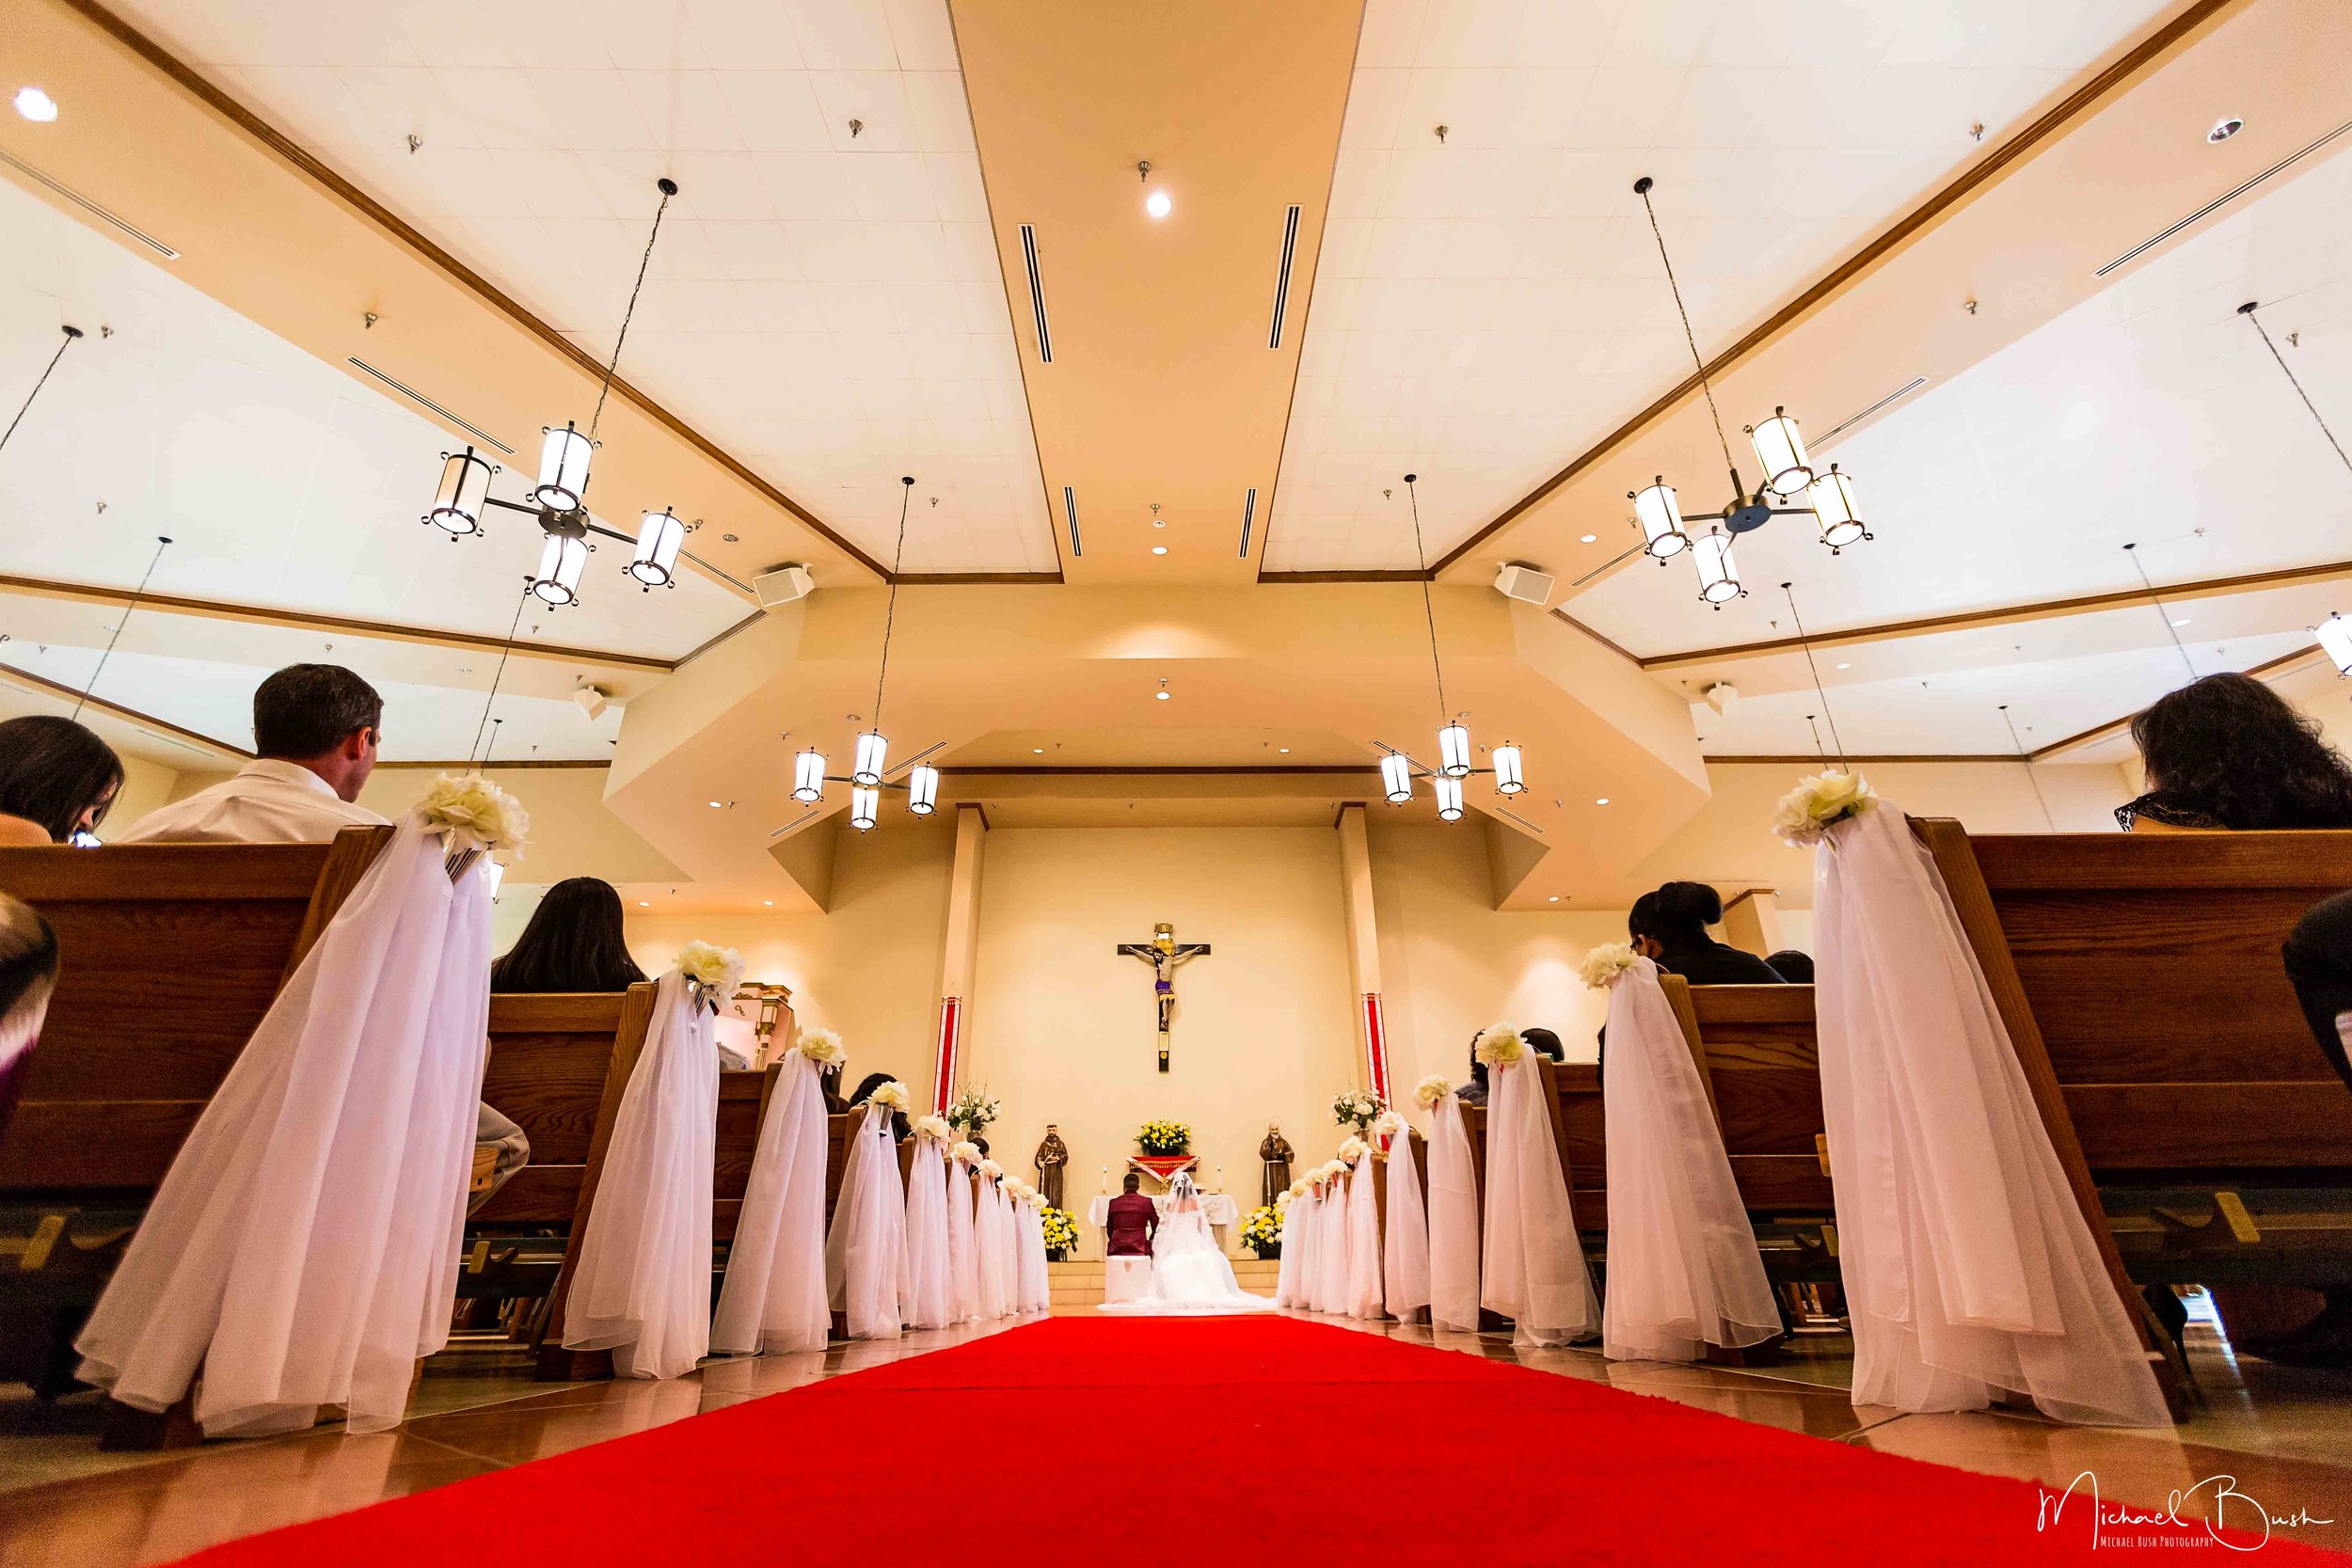 Wedding-Details-Bride-Fort Worth-colors-Ceremony-weddingceremony-brides-groom-weddingvenue-church-catholic.jpg